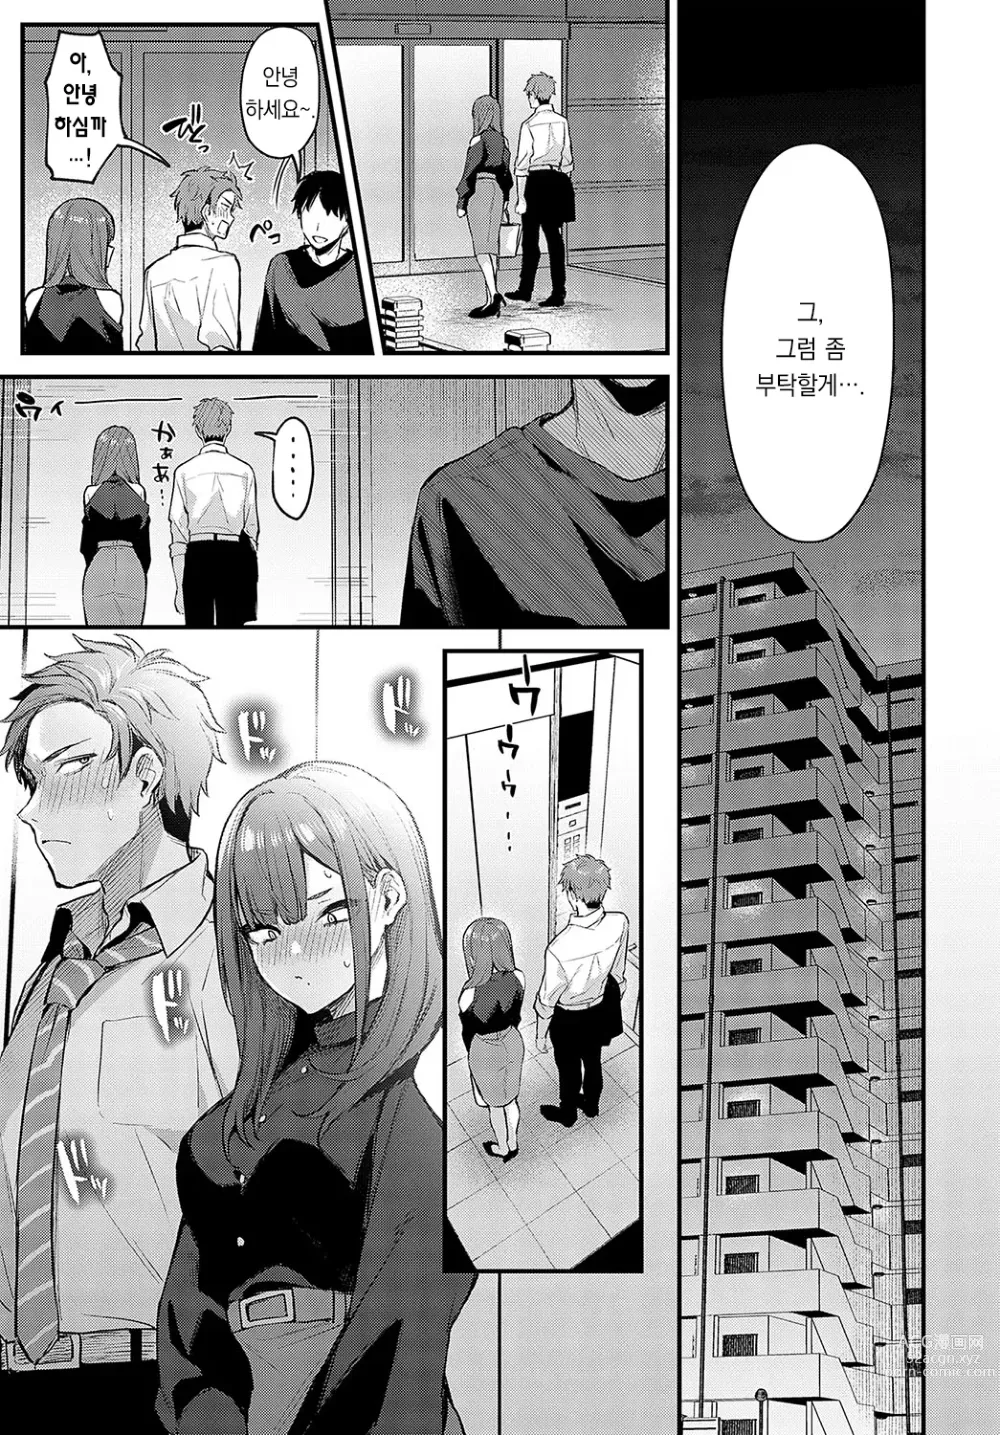 Page 12 of manga 한 번 더 해보고 싶어.